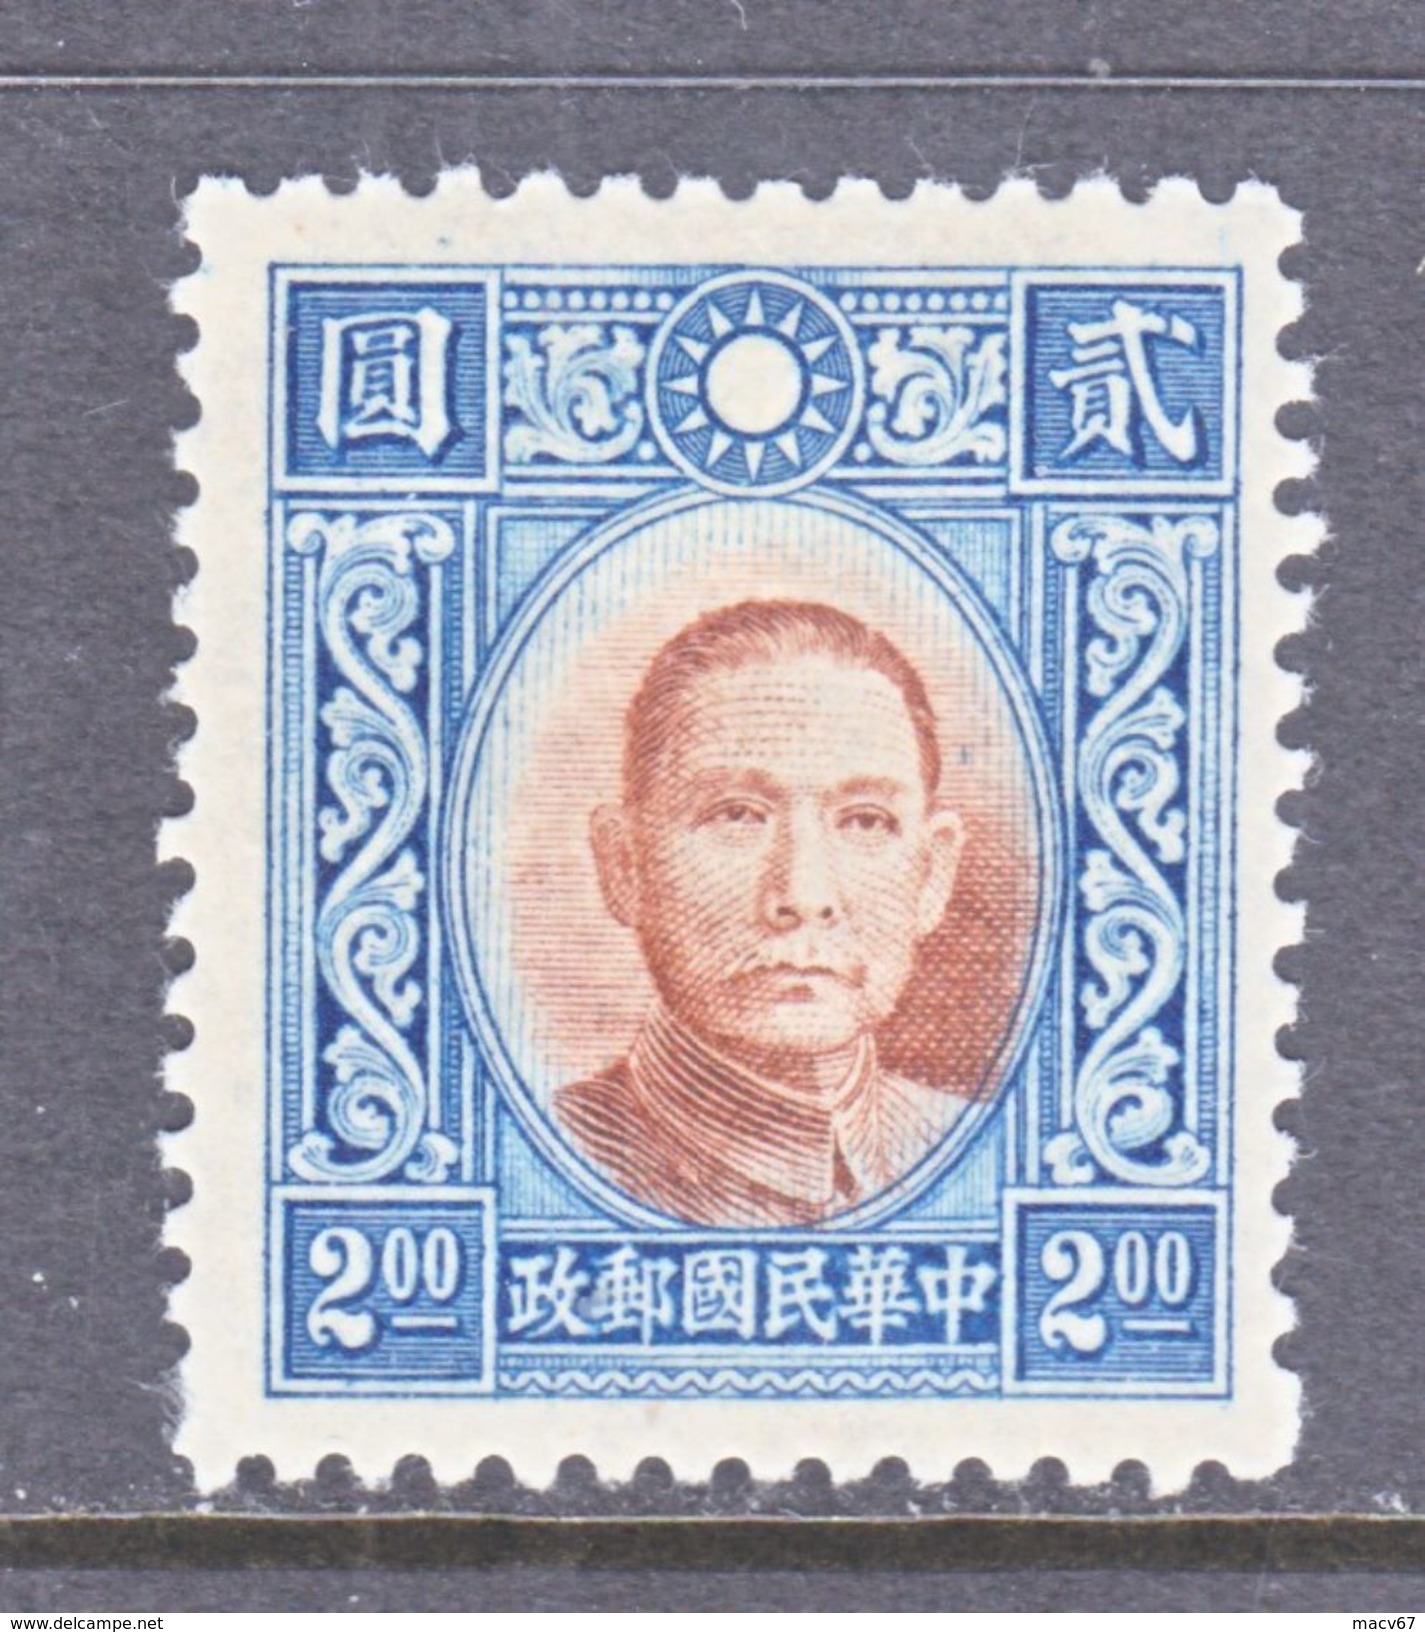 CHINA  345   Type I  Perf.  12 1/2   *  No Wmk. - 1912-1949 Republic